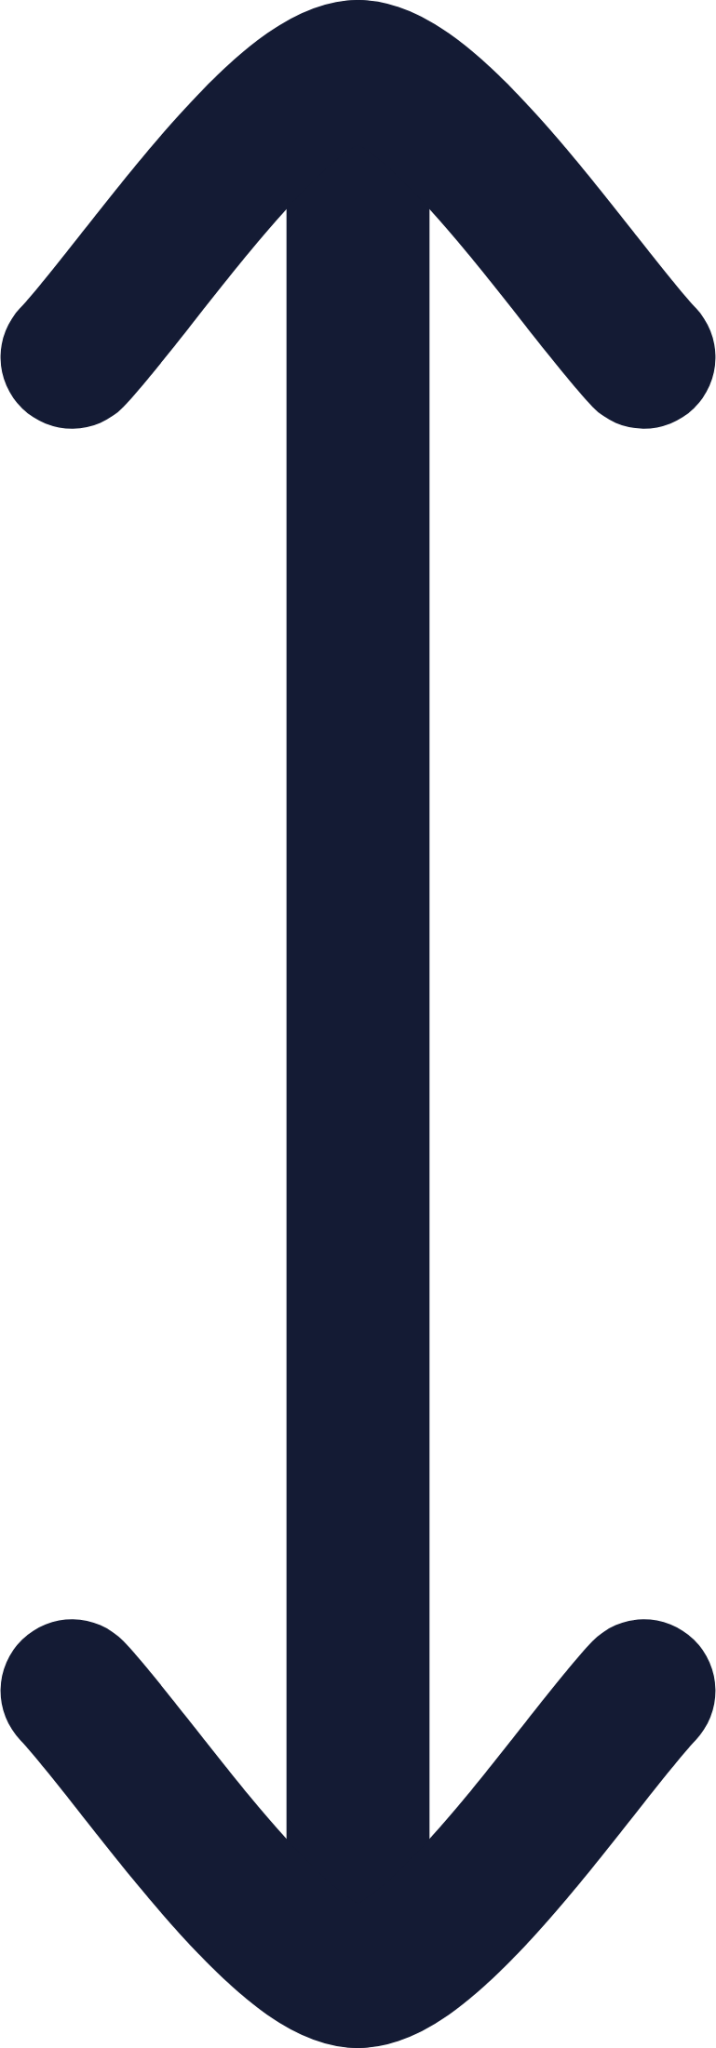 arrow vertical icon